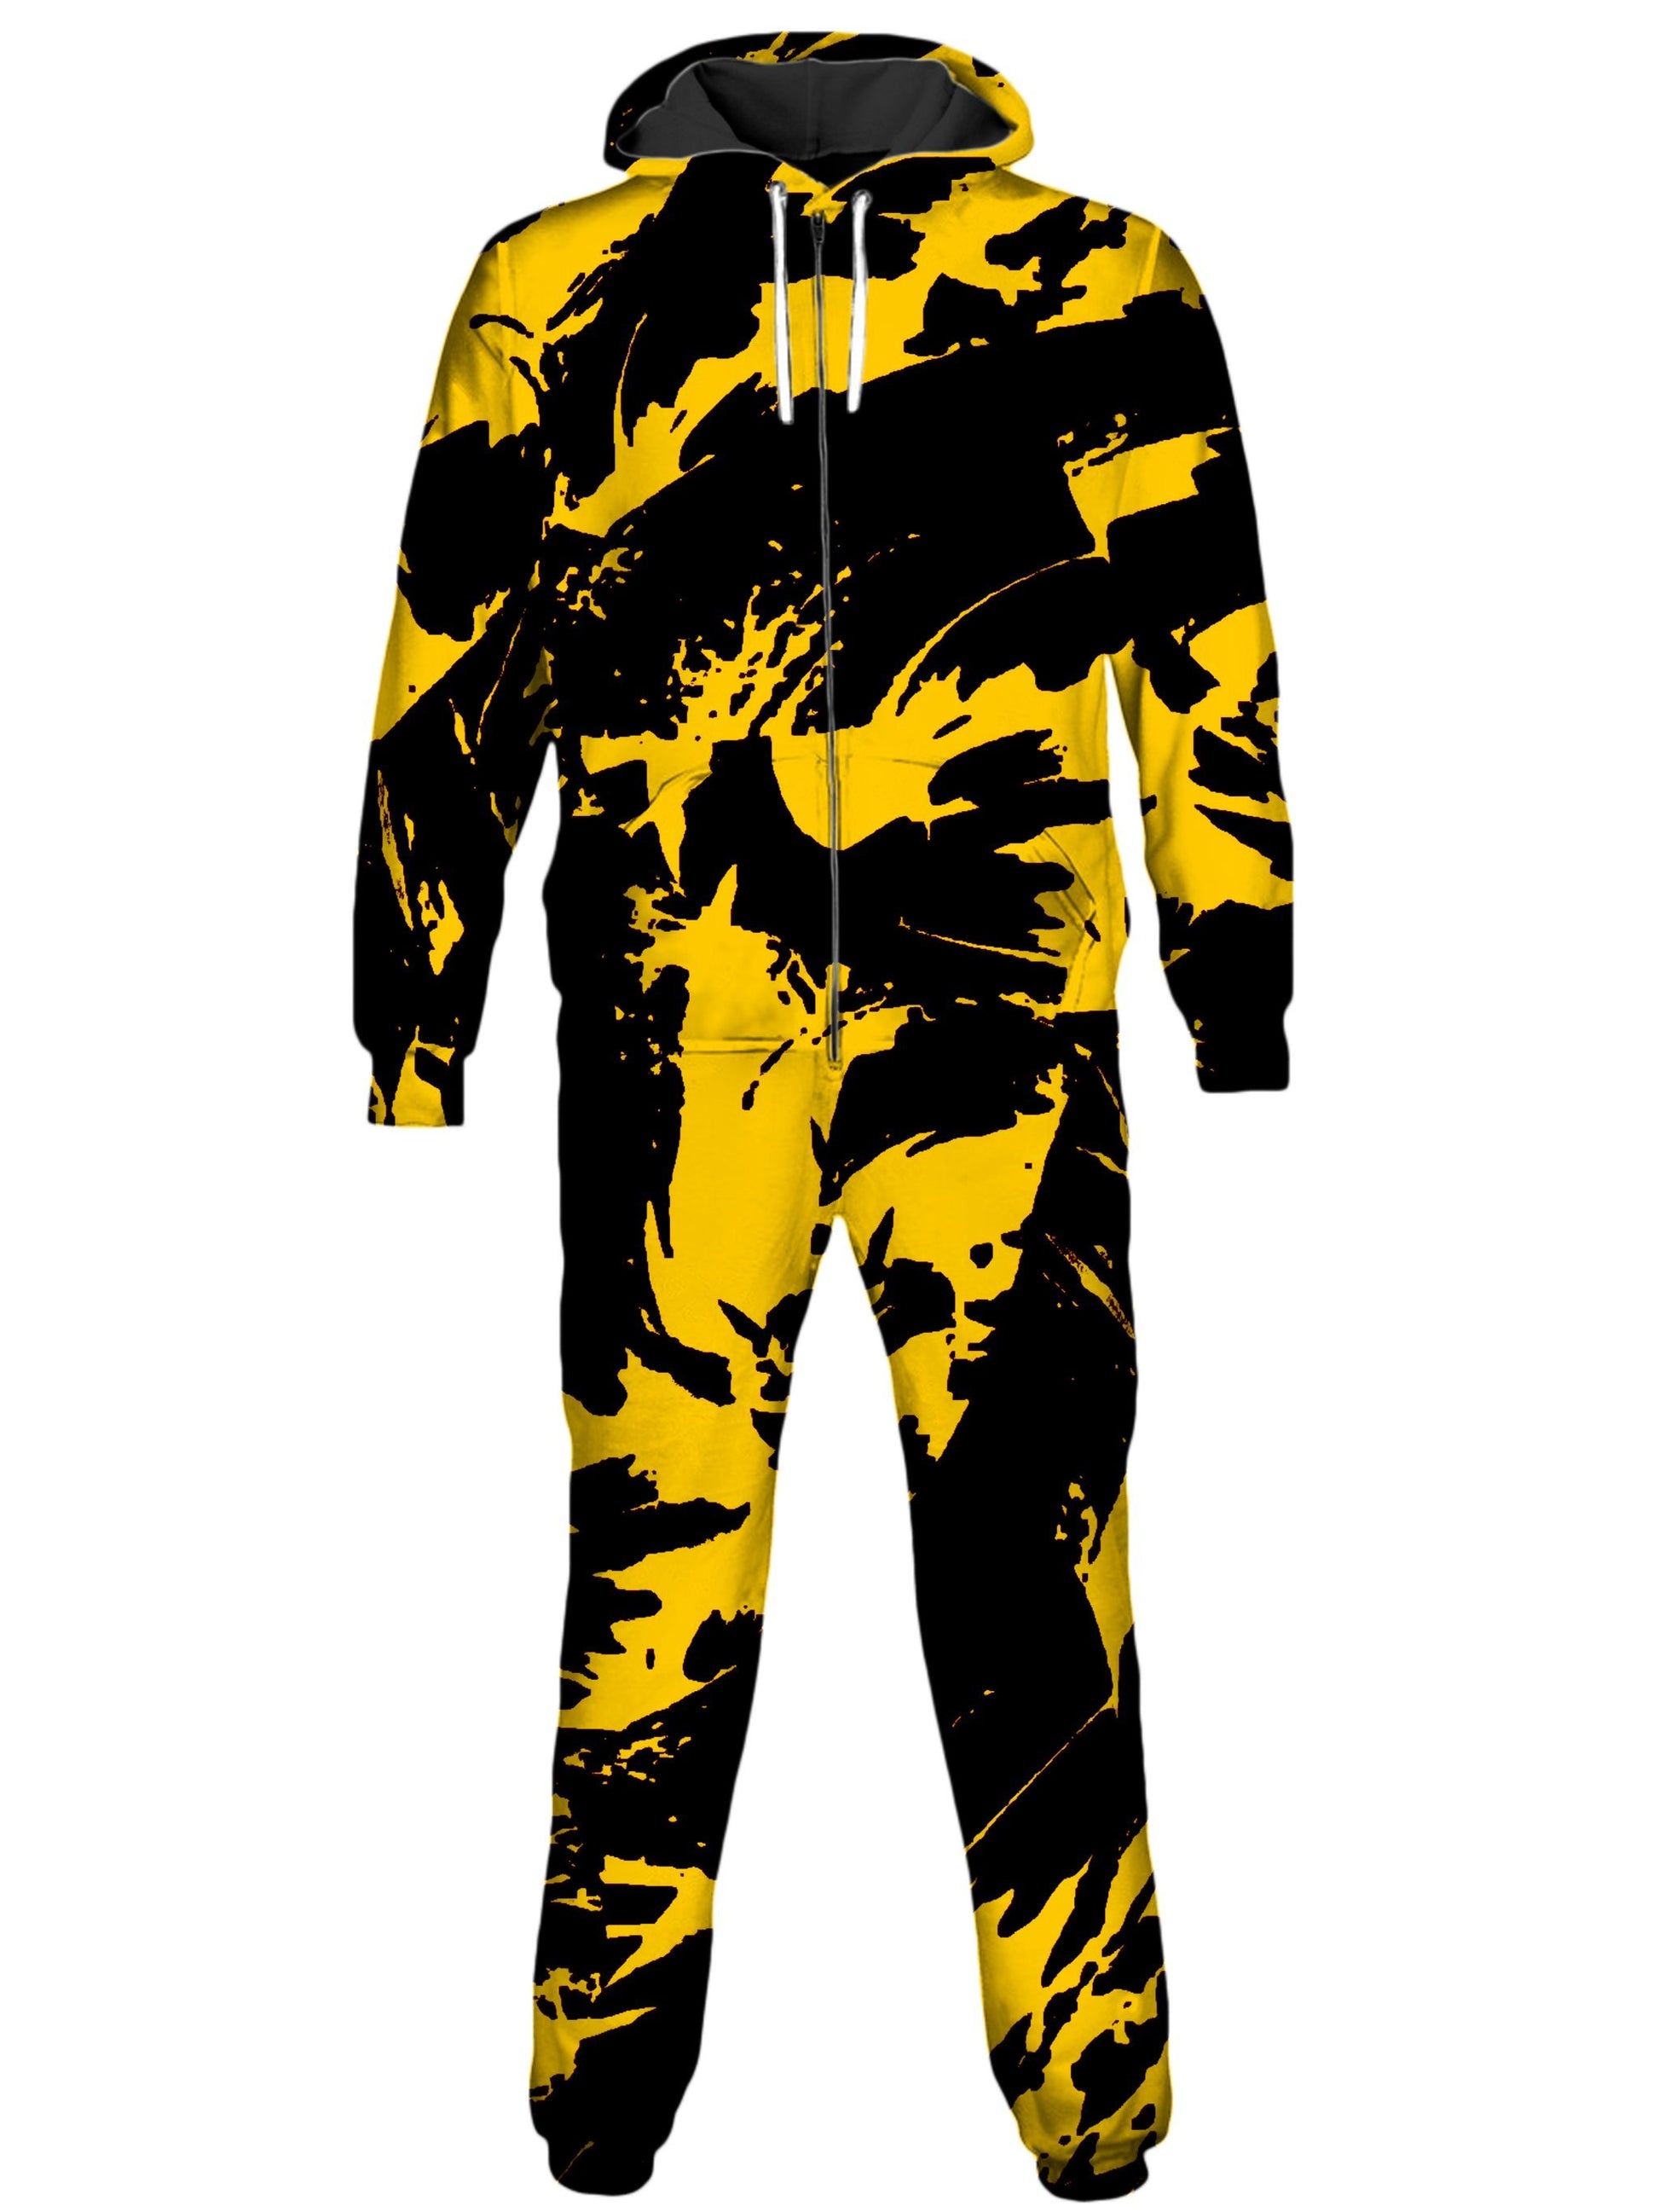 Big Tex Funkadelic Black and Yellow Paint Splatter Onesie